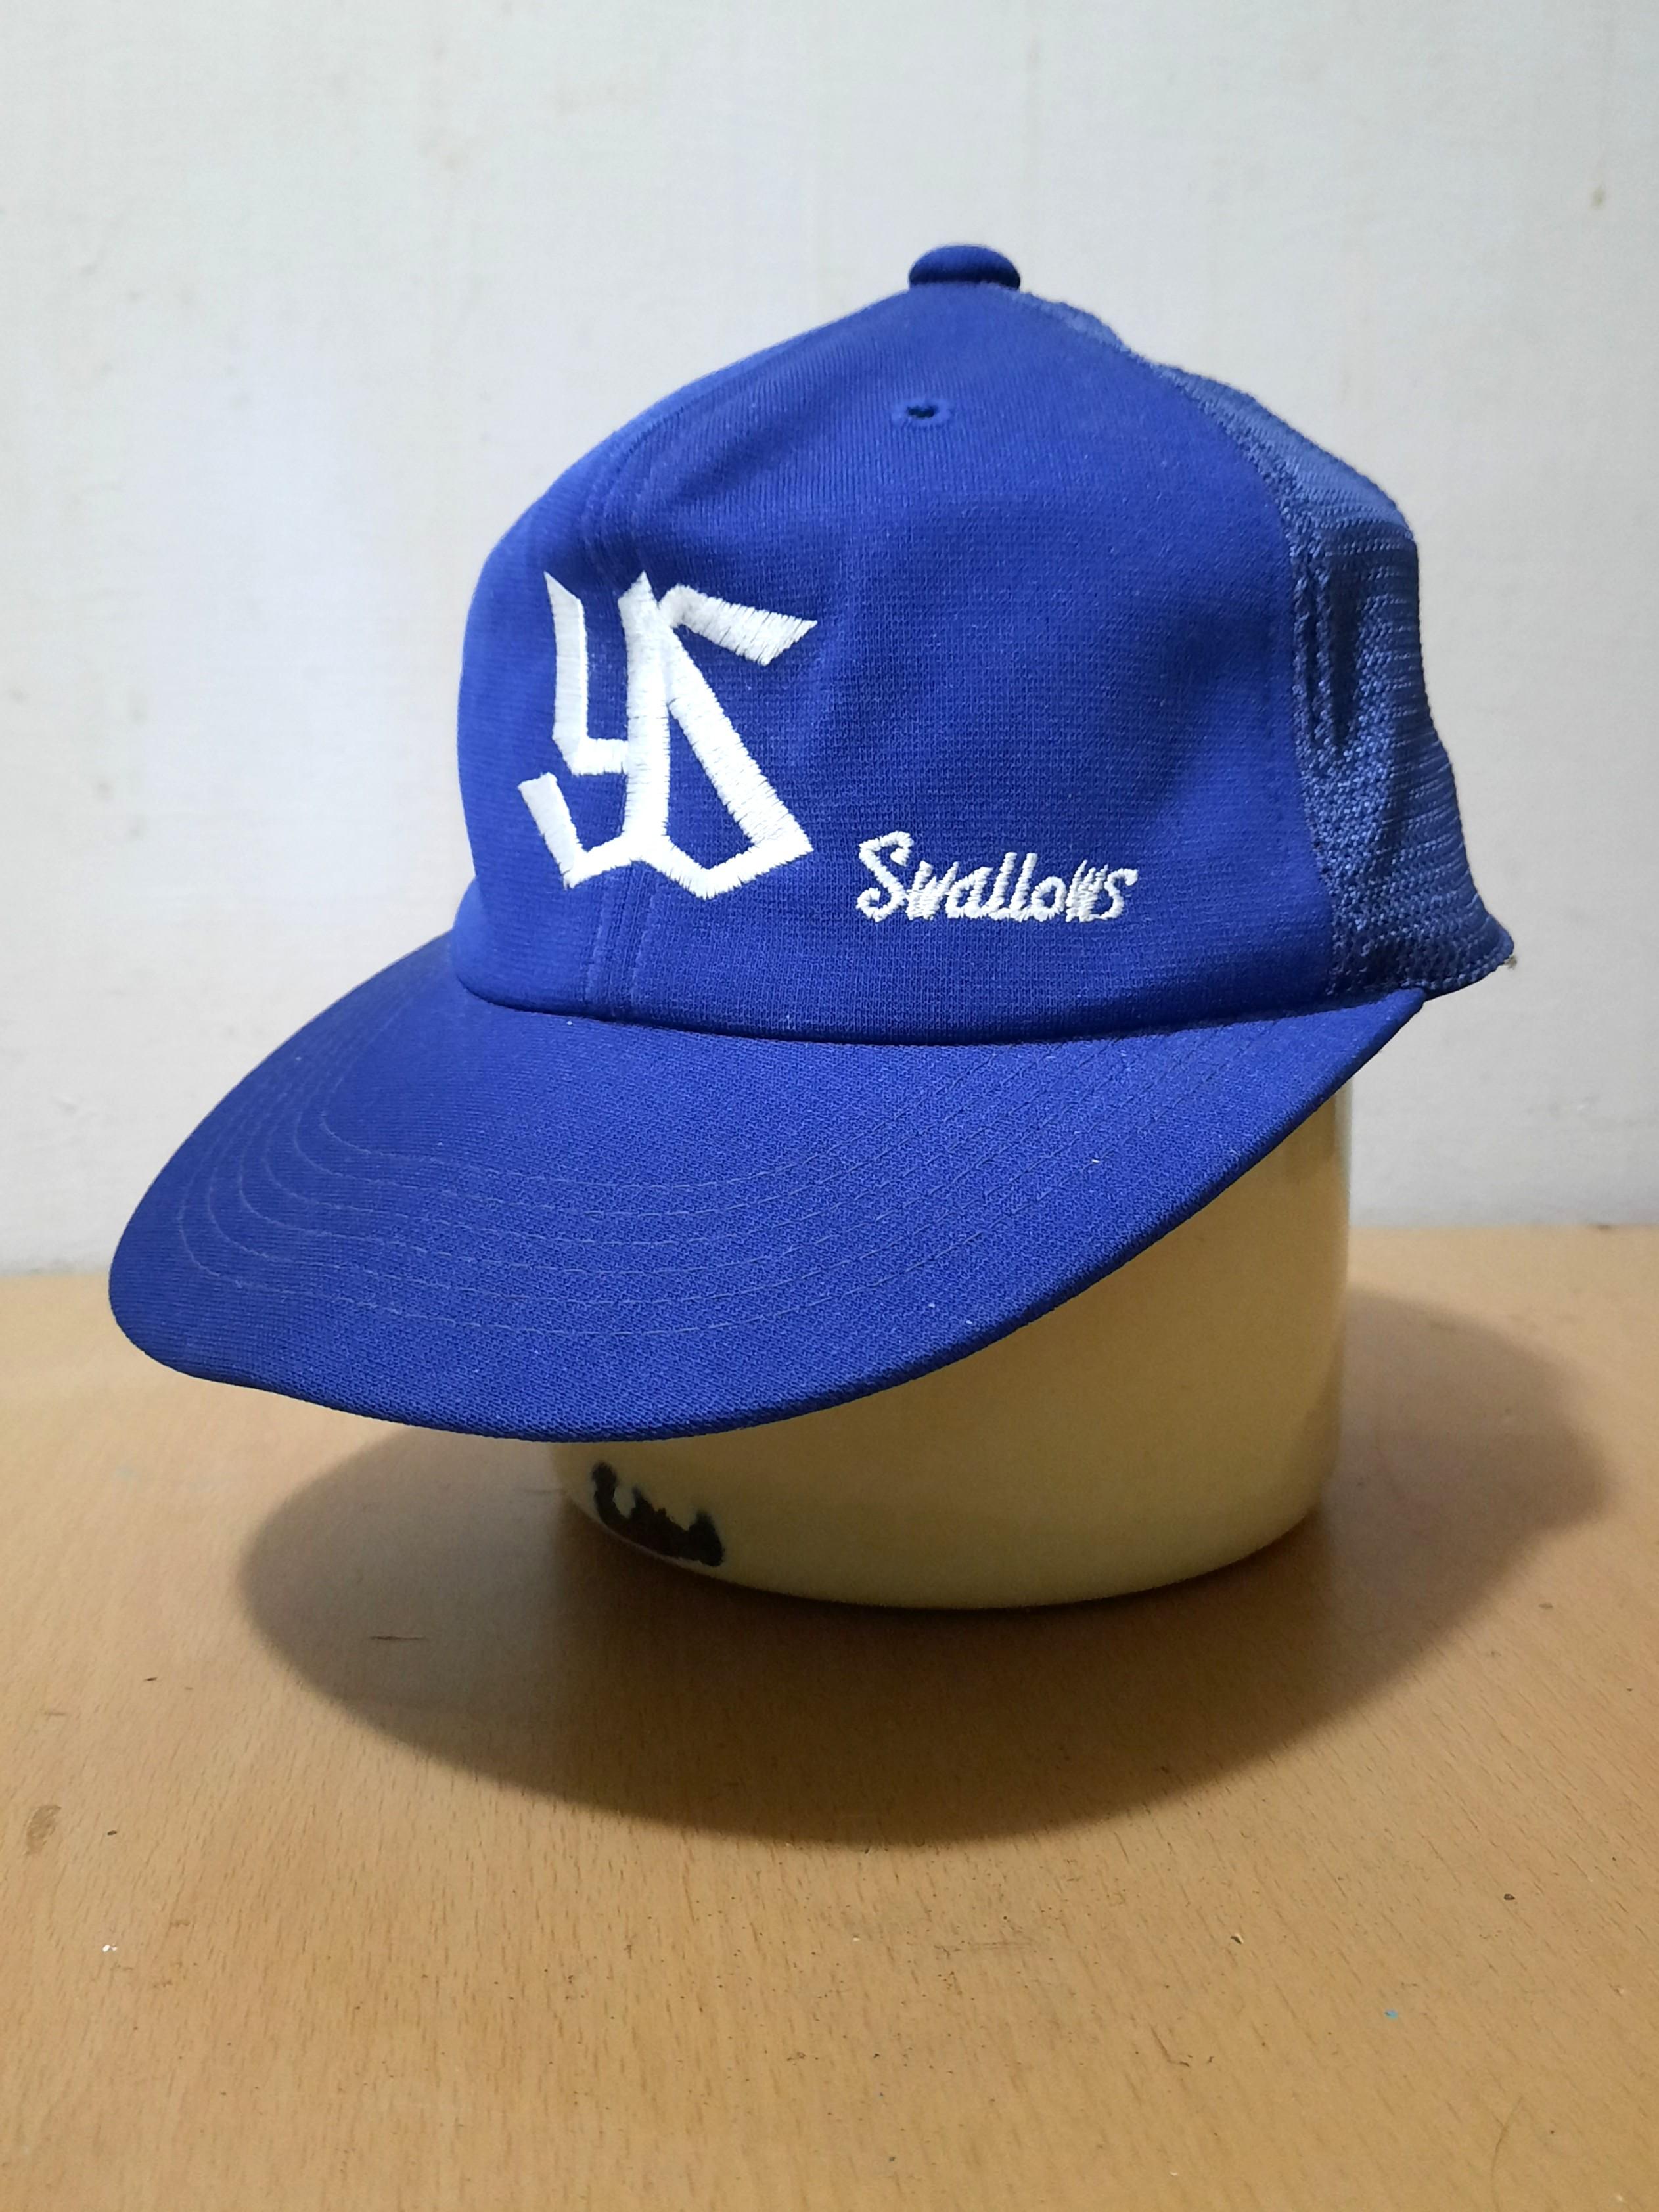 Vintage adjustable Yakult Swallows hat from Japan pro baseball